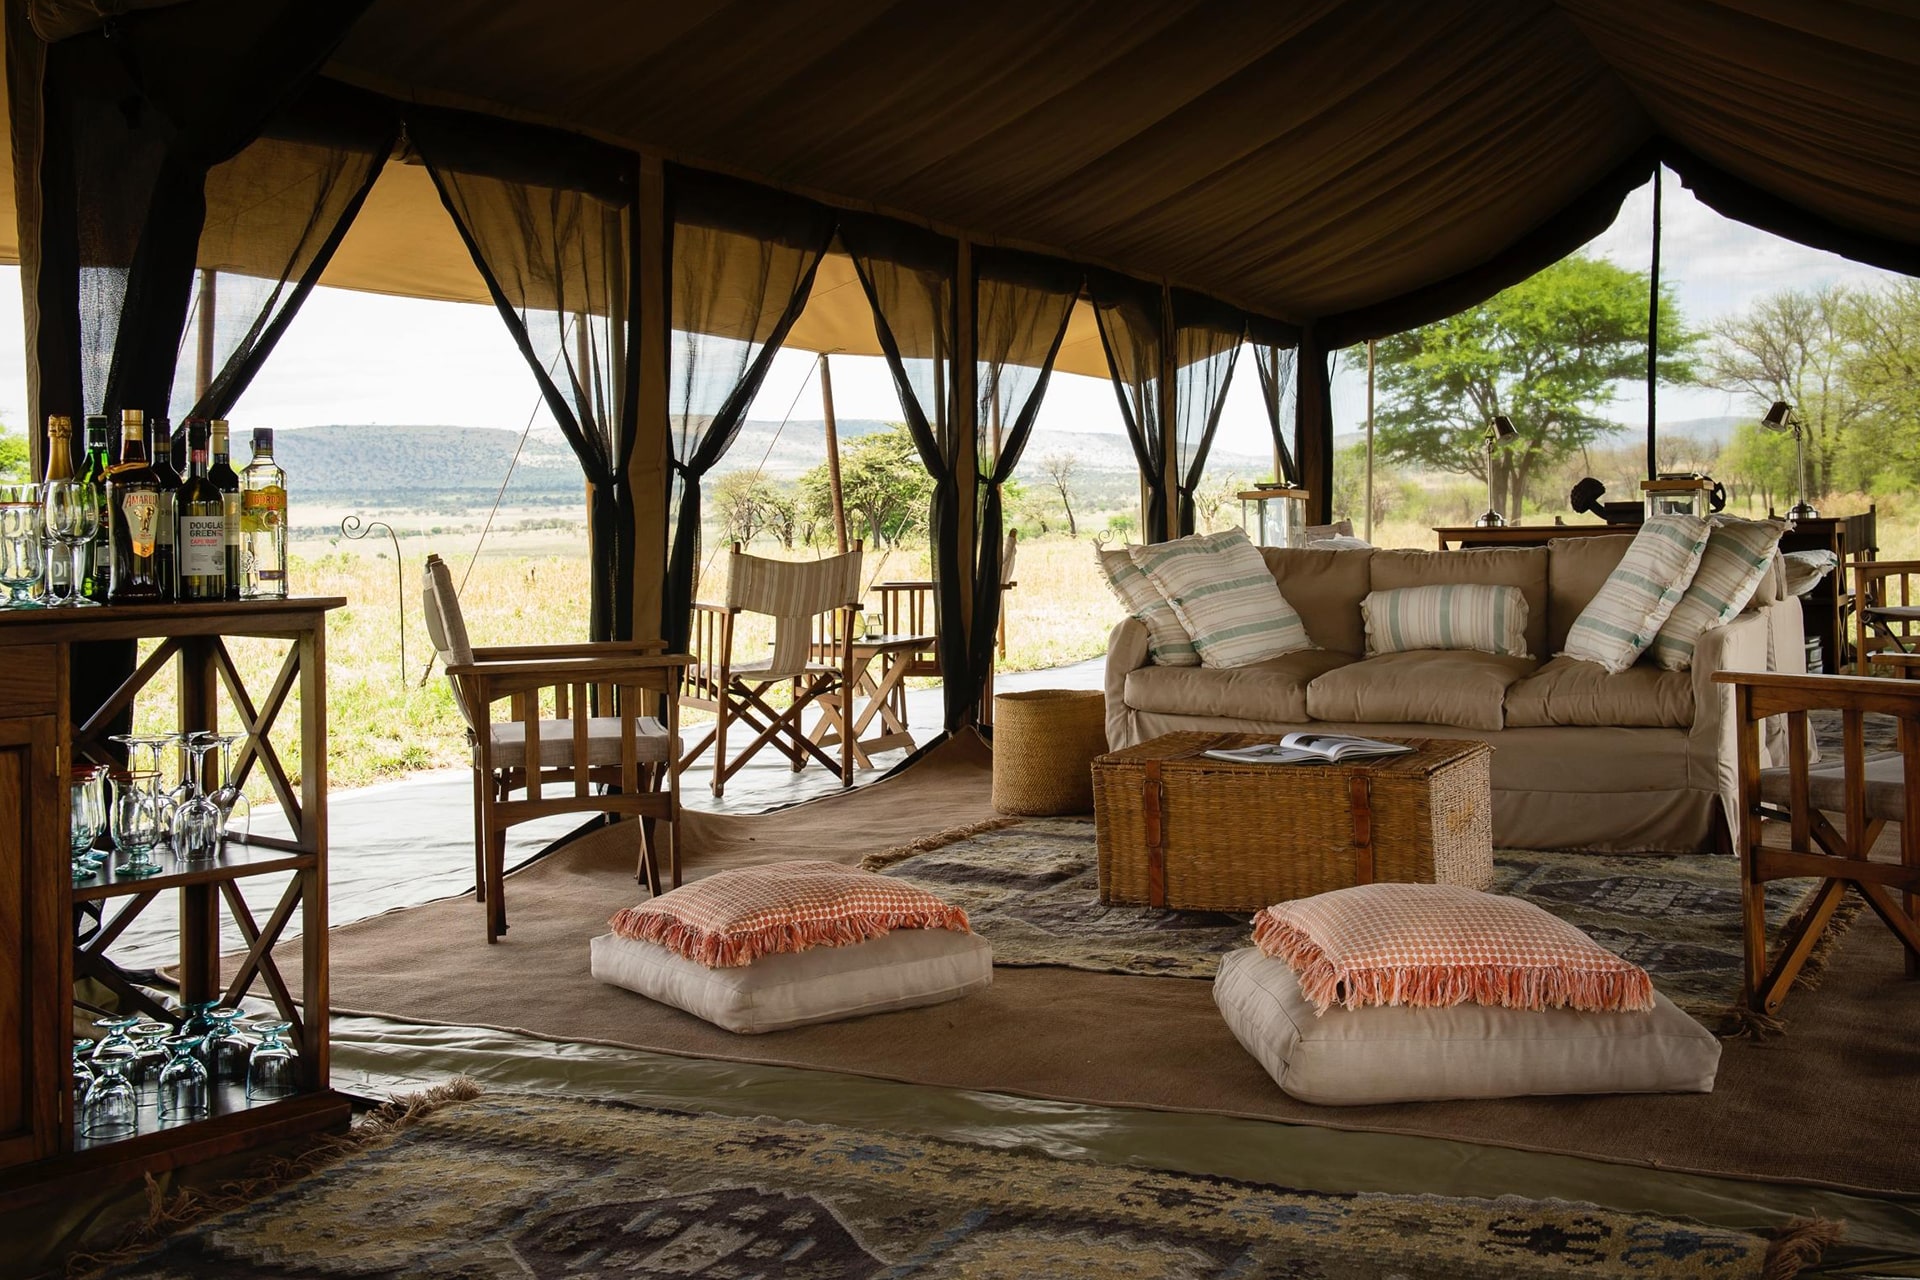 Tent interior at Nomad Serengeti Safari Camp